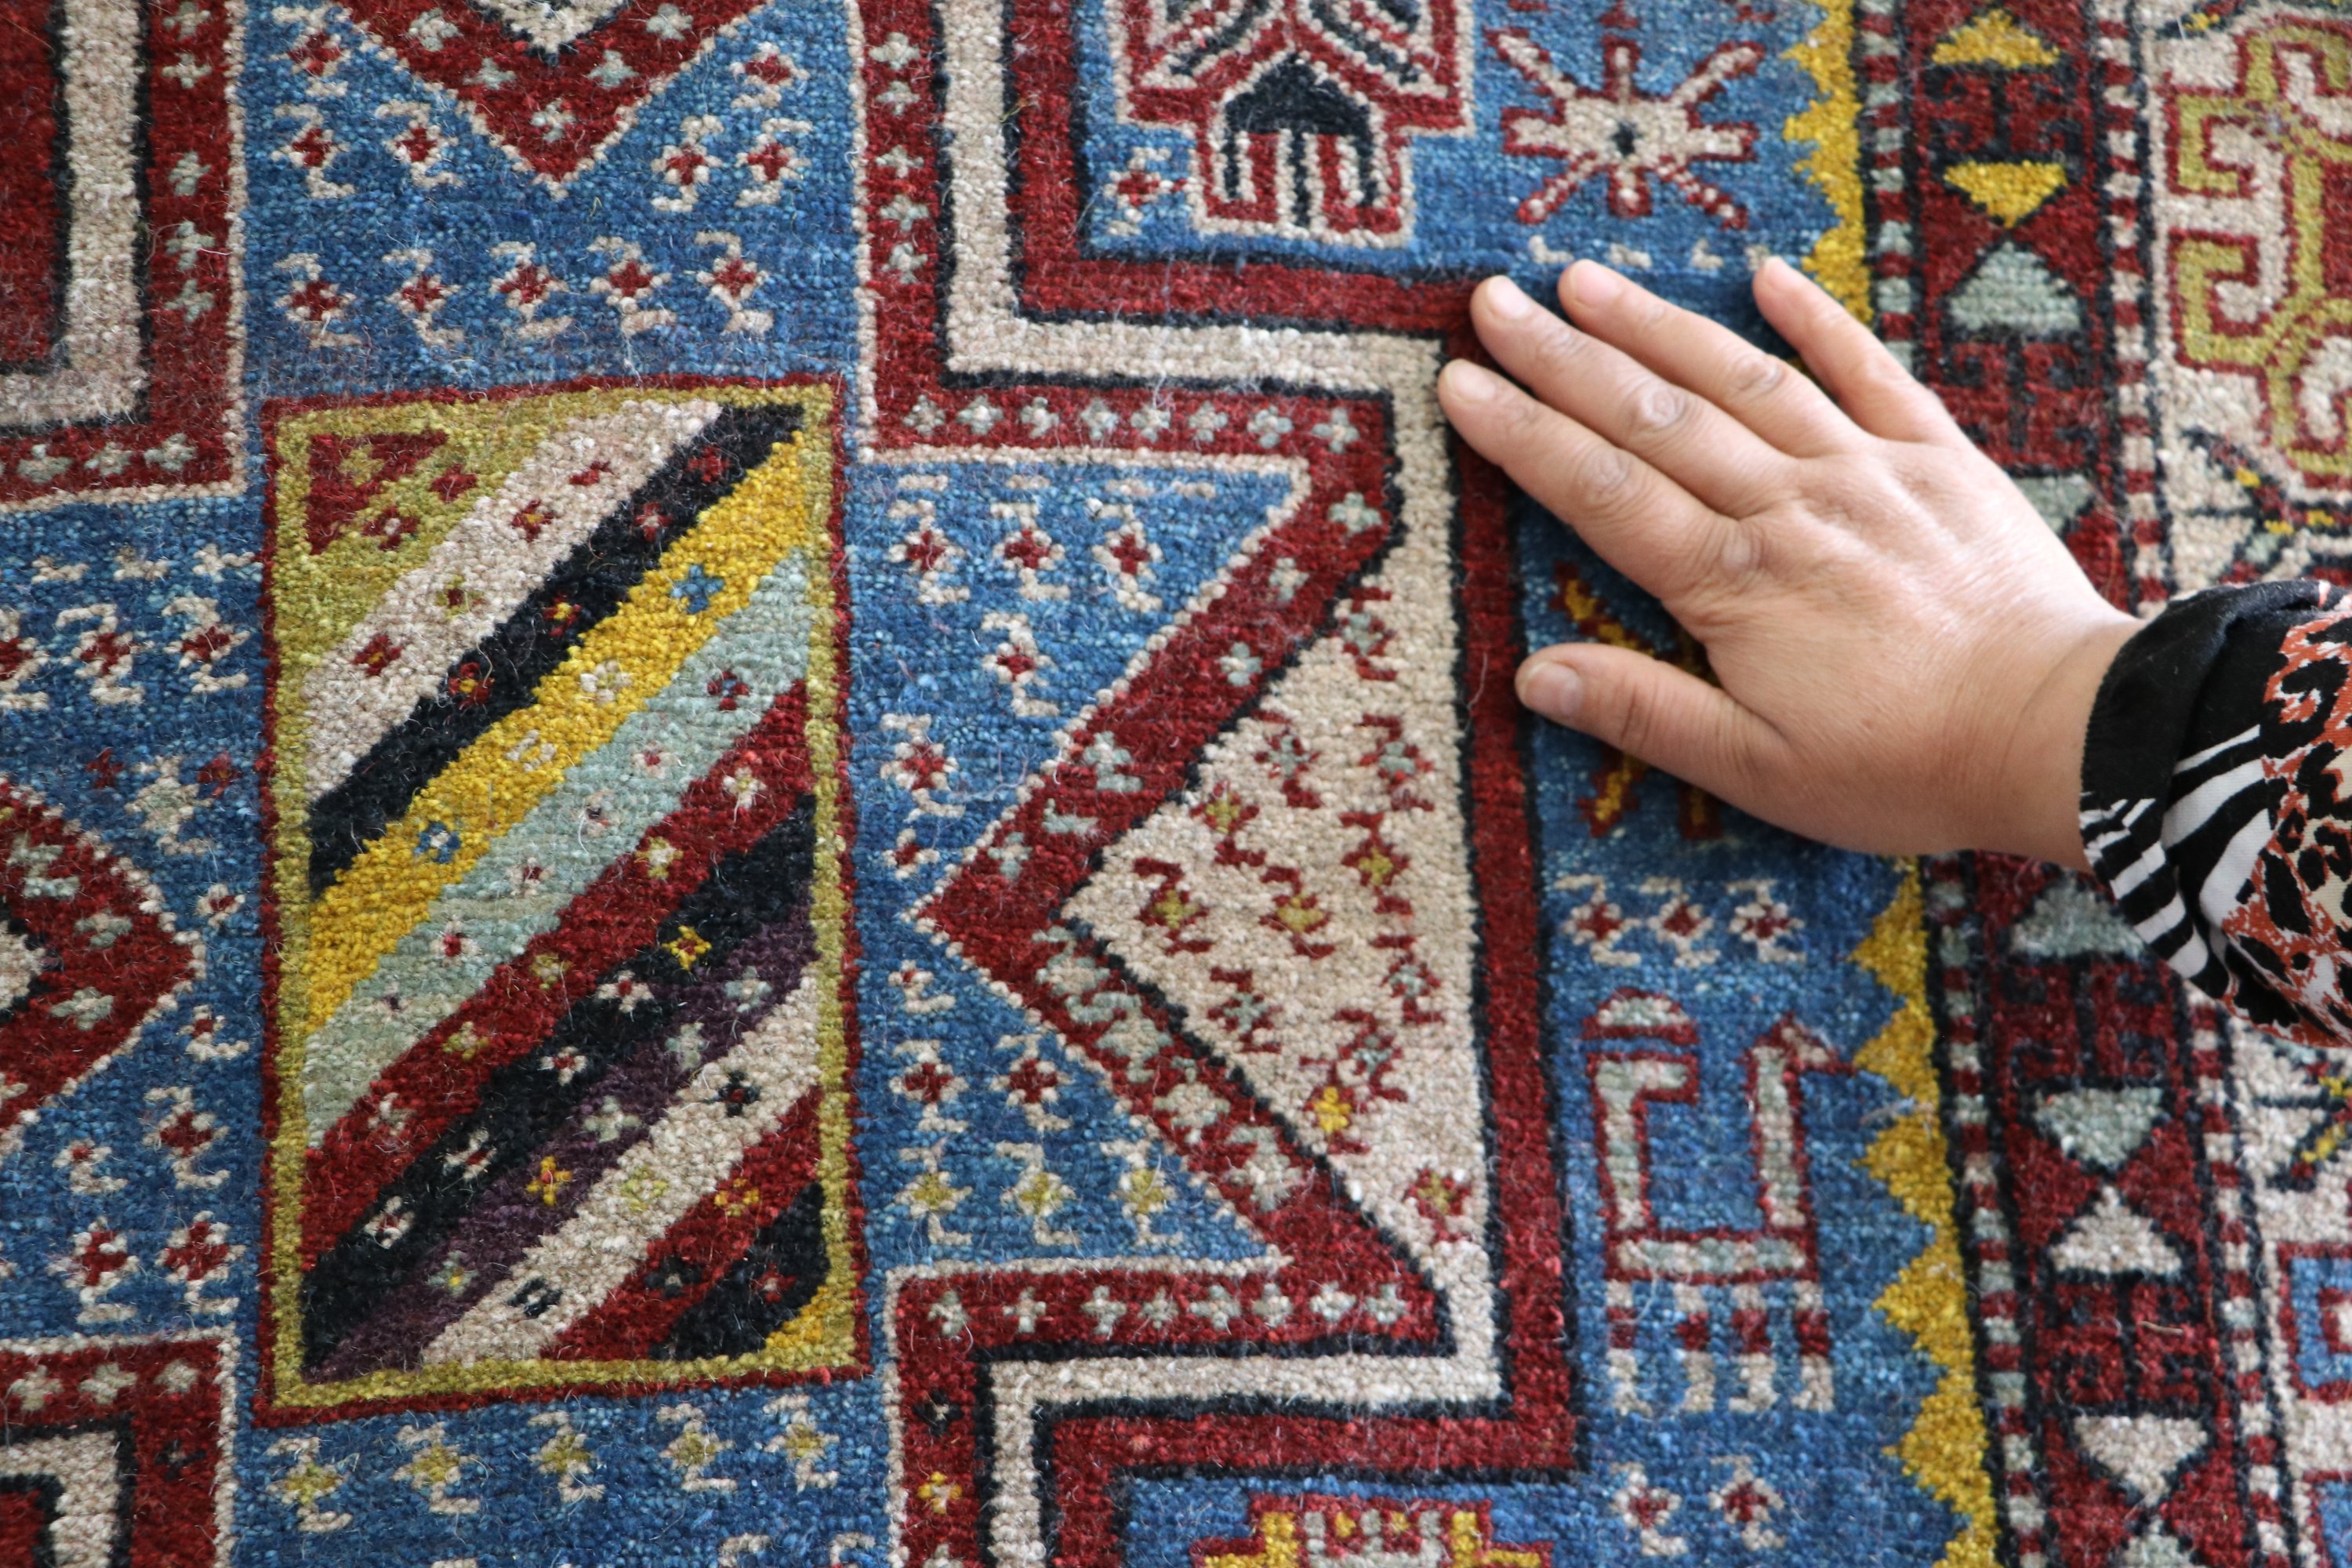 Turkish woven carpets adorn Japanese homes | Daily Sabah